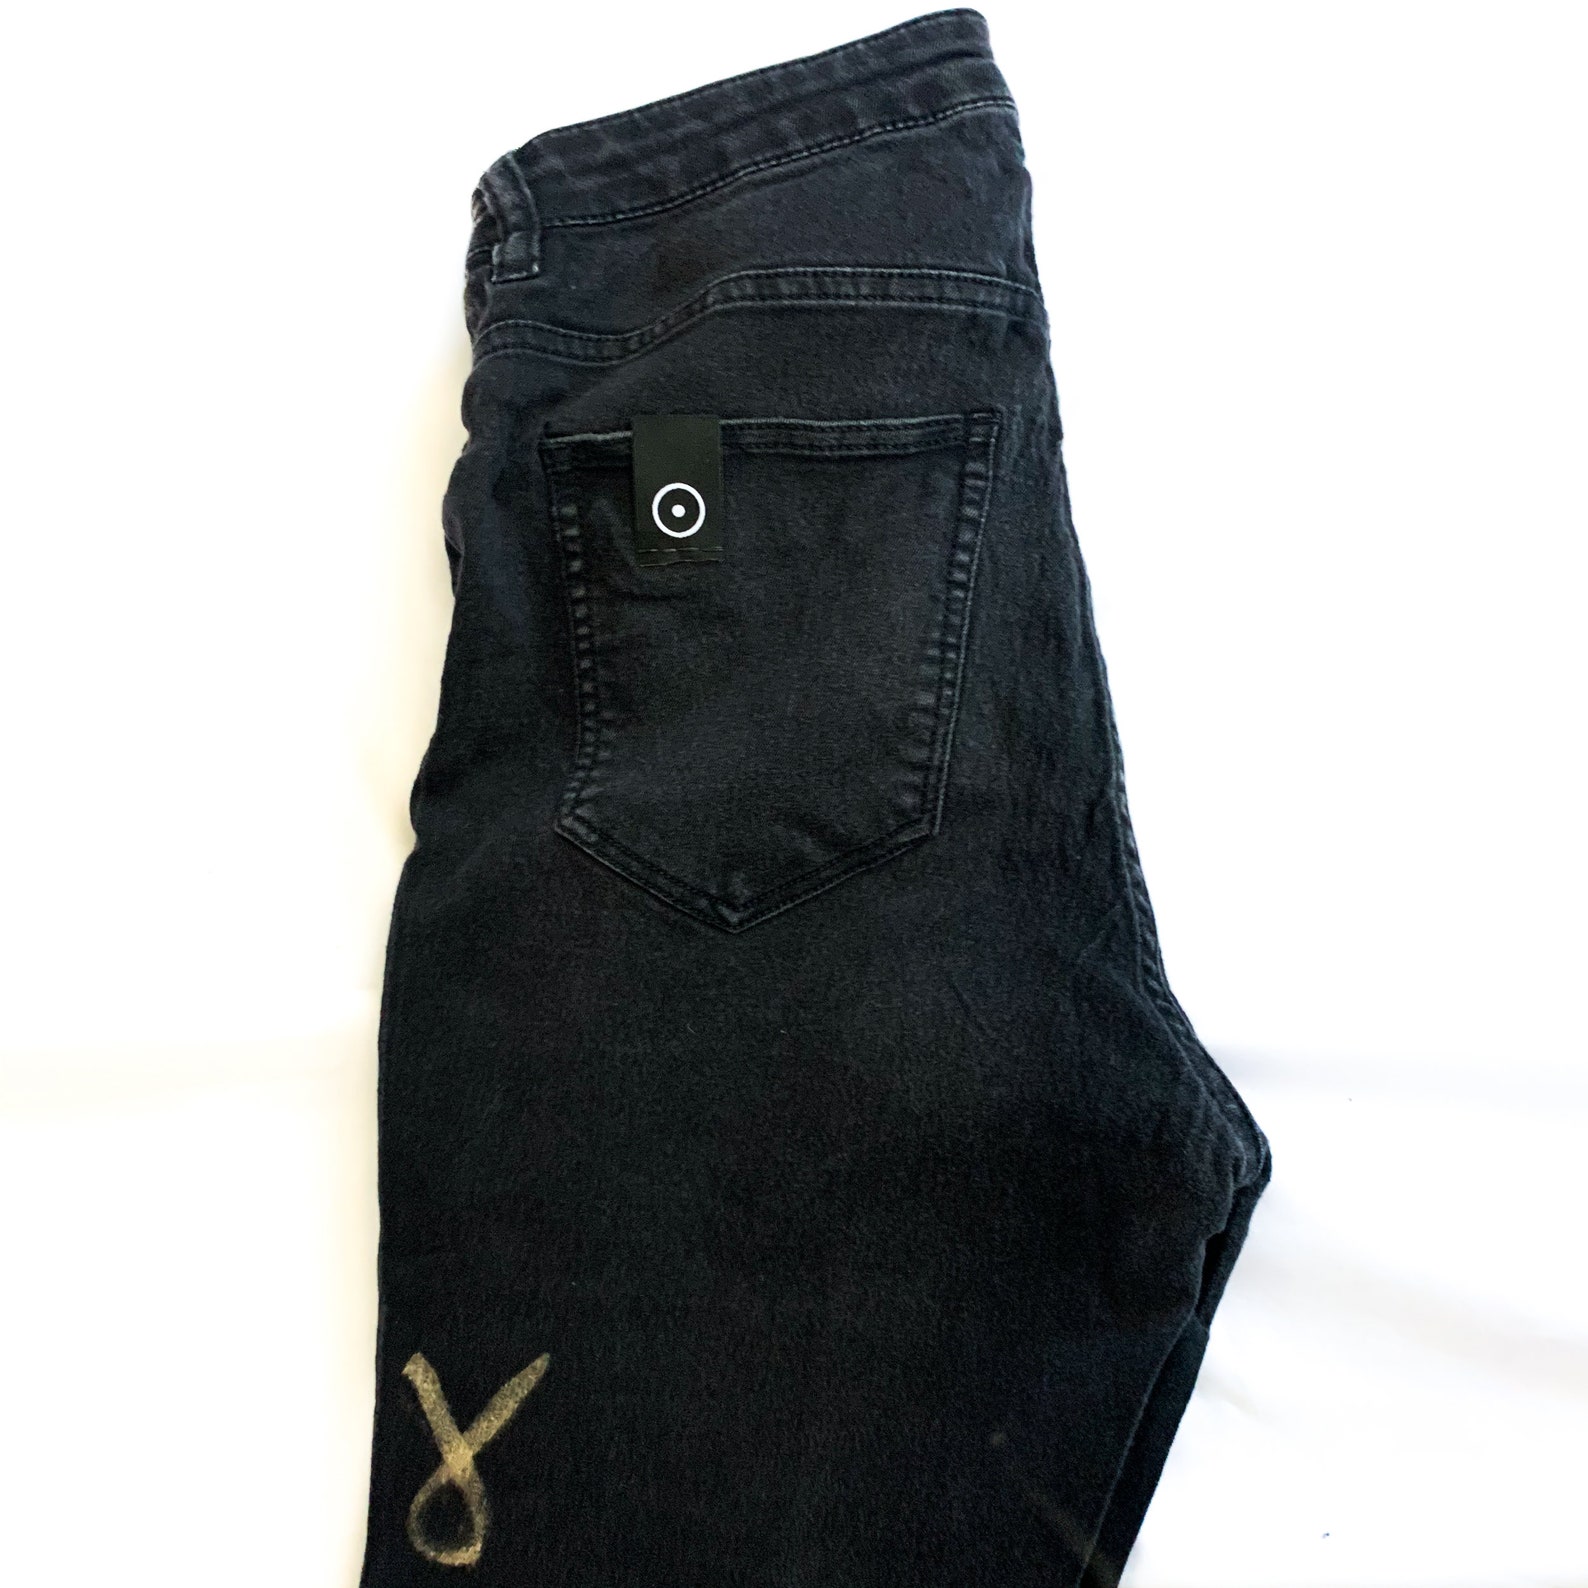 Encryption Jeans 8 One of a Kind Custom Sigil Pants | Etsy